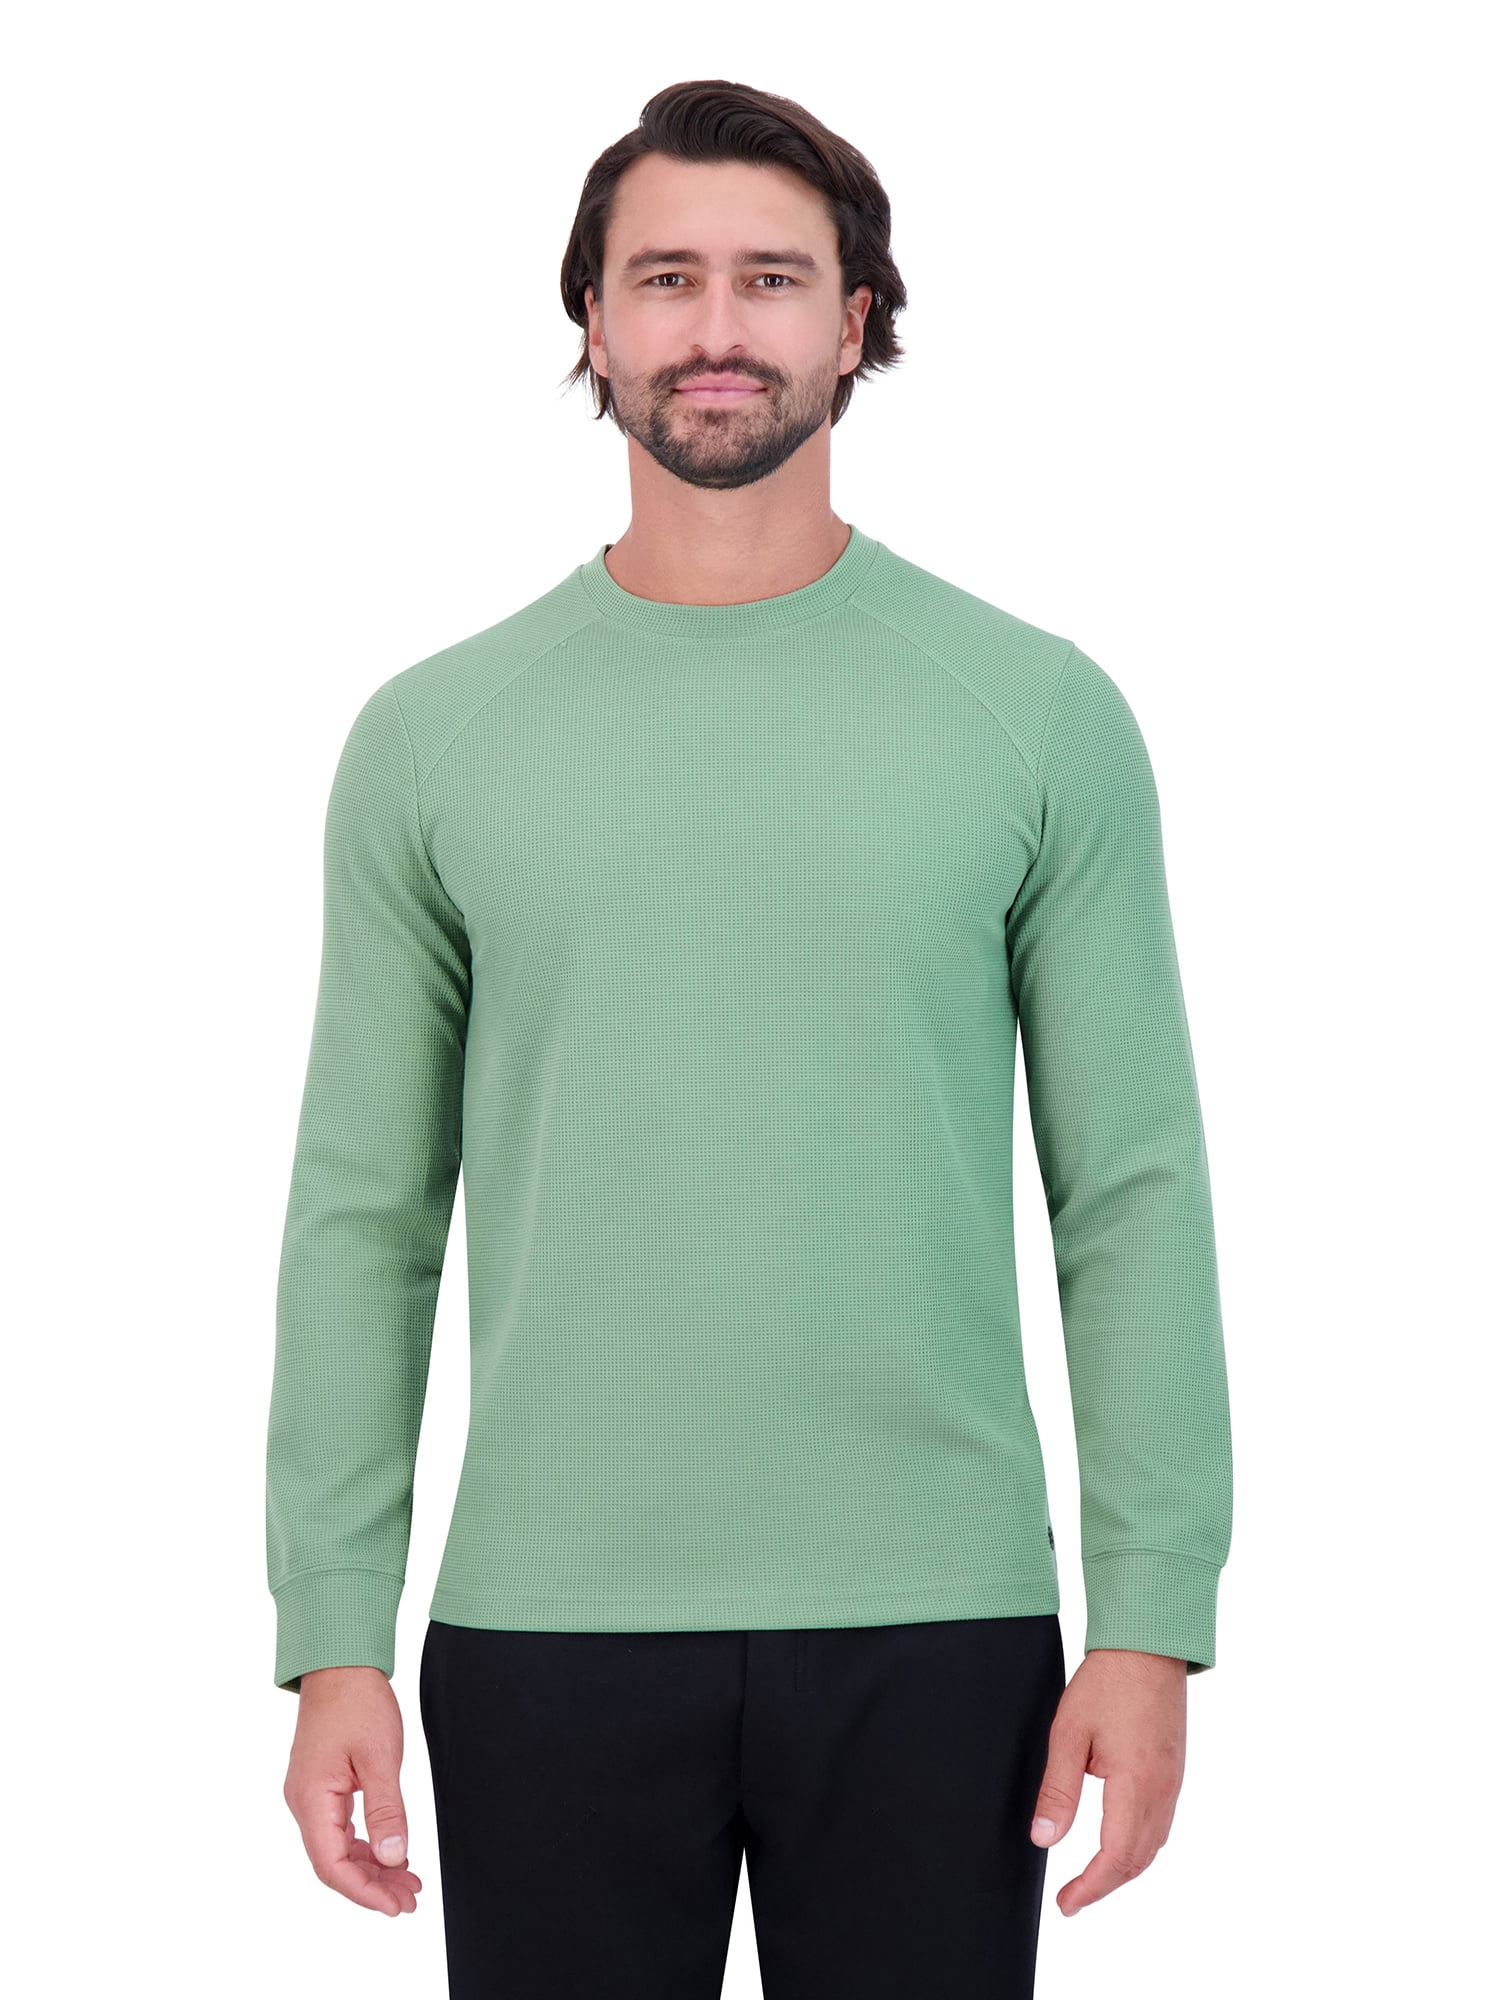 Gaiam Men's Cozy & Cool Long Sleeve Crew Sweatshirt, Sizes S-XL 